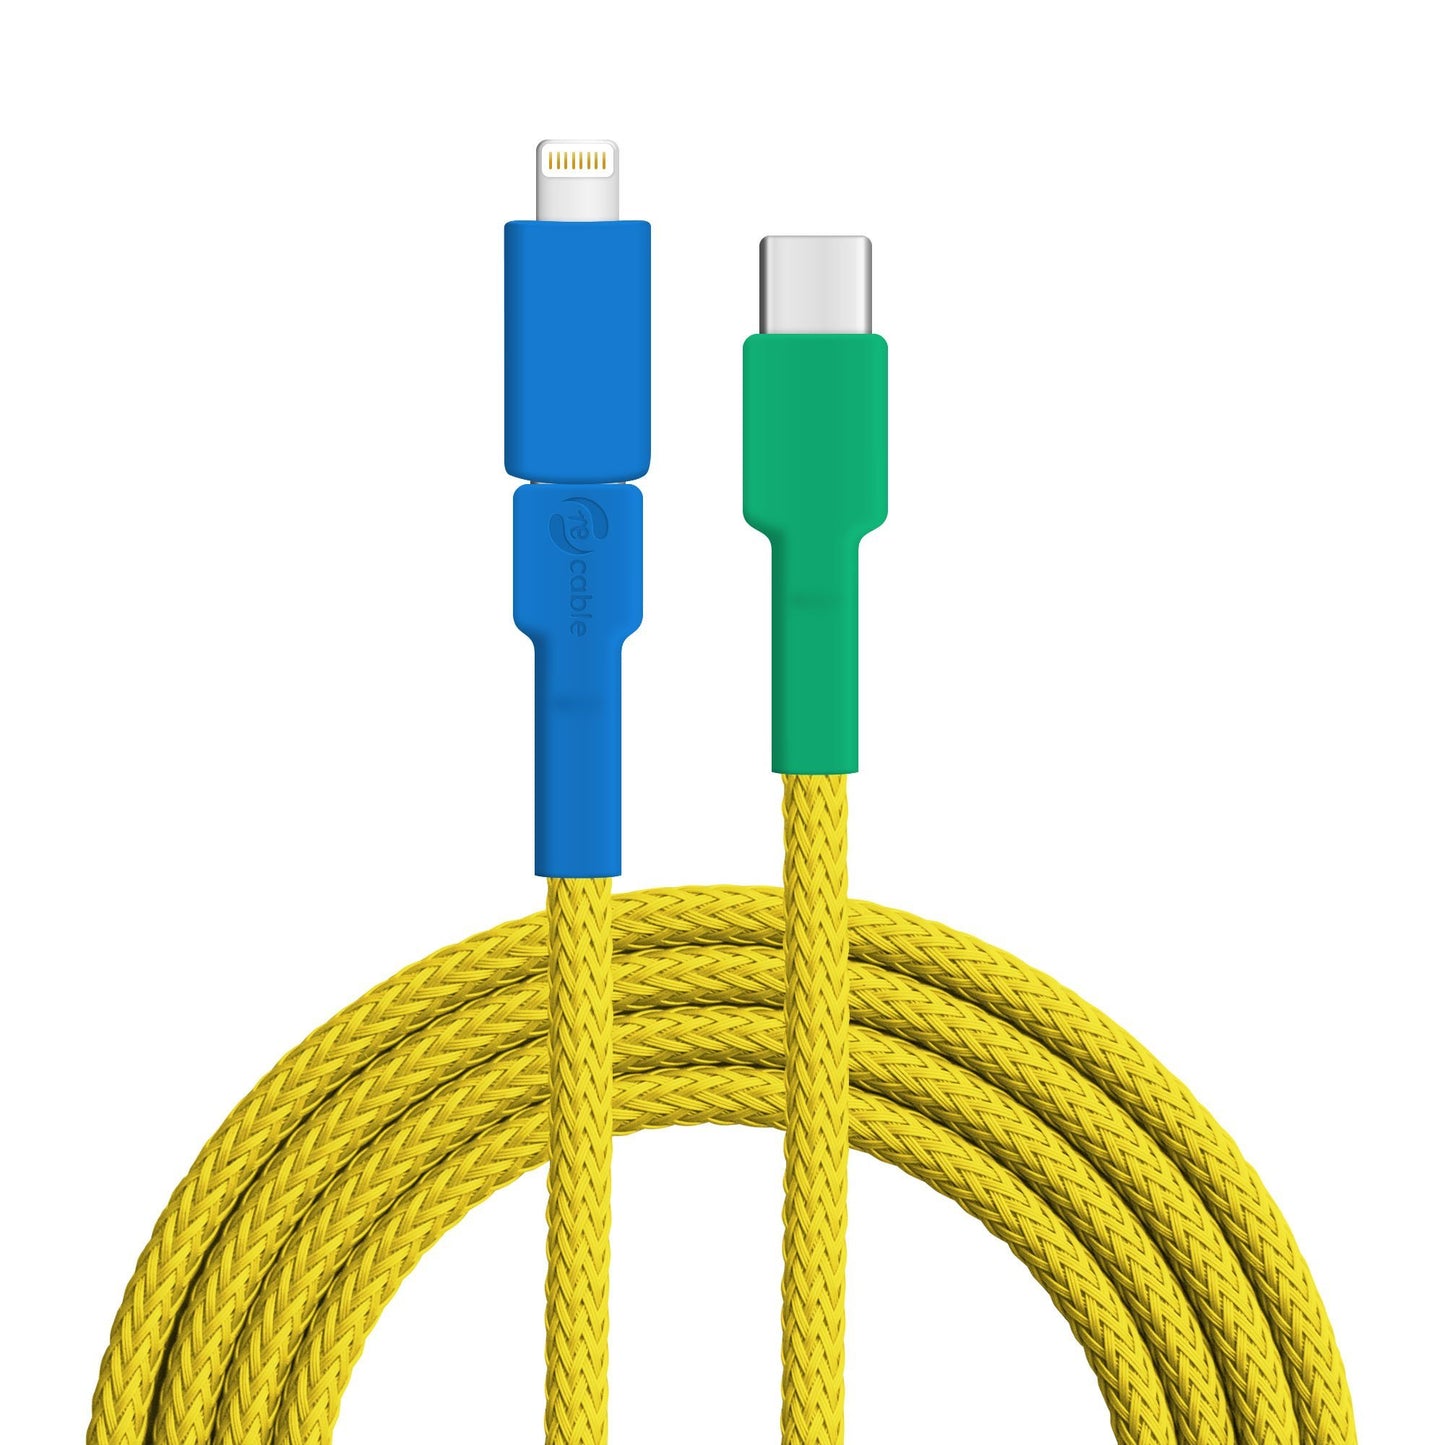 USB-Kabel, Design: Gelb­brustara, Anschlüsse: USB C auf Micro-USB mit Lightning Adapter (verbunden)